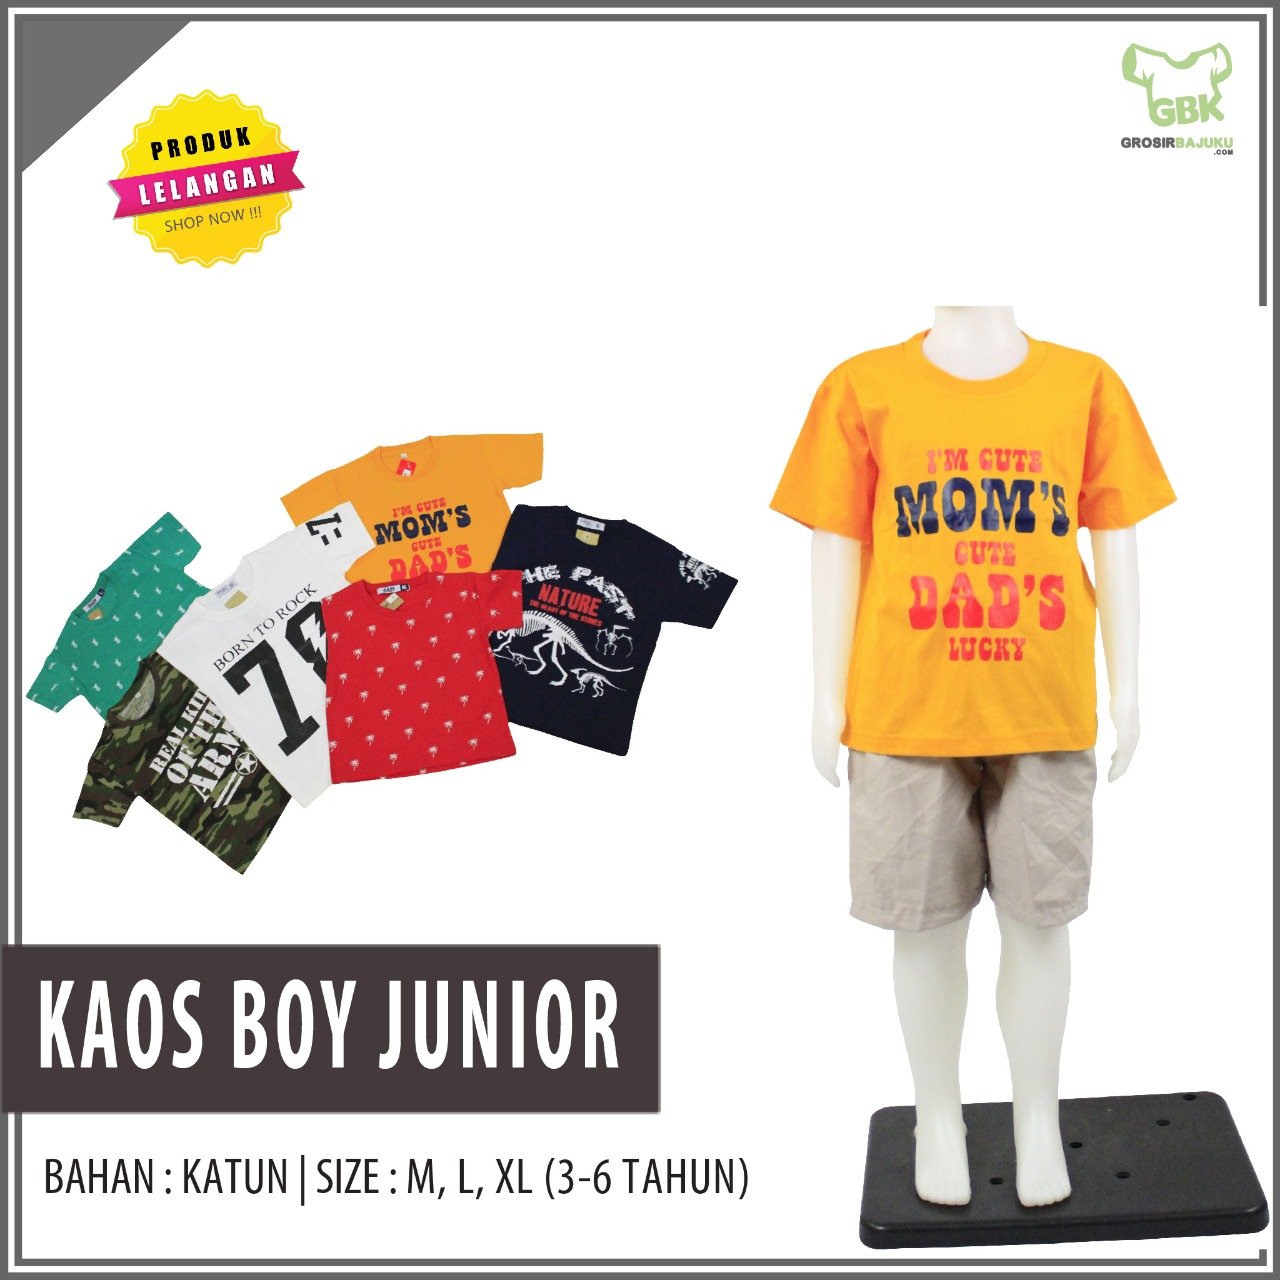 kaos boy junior